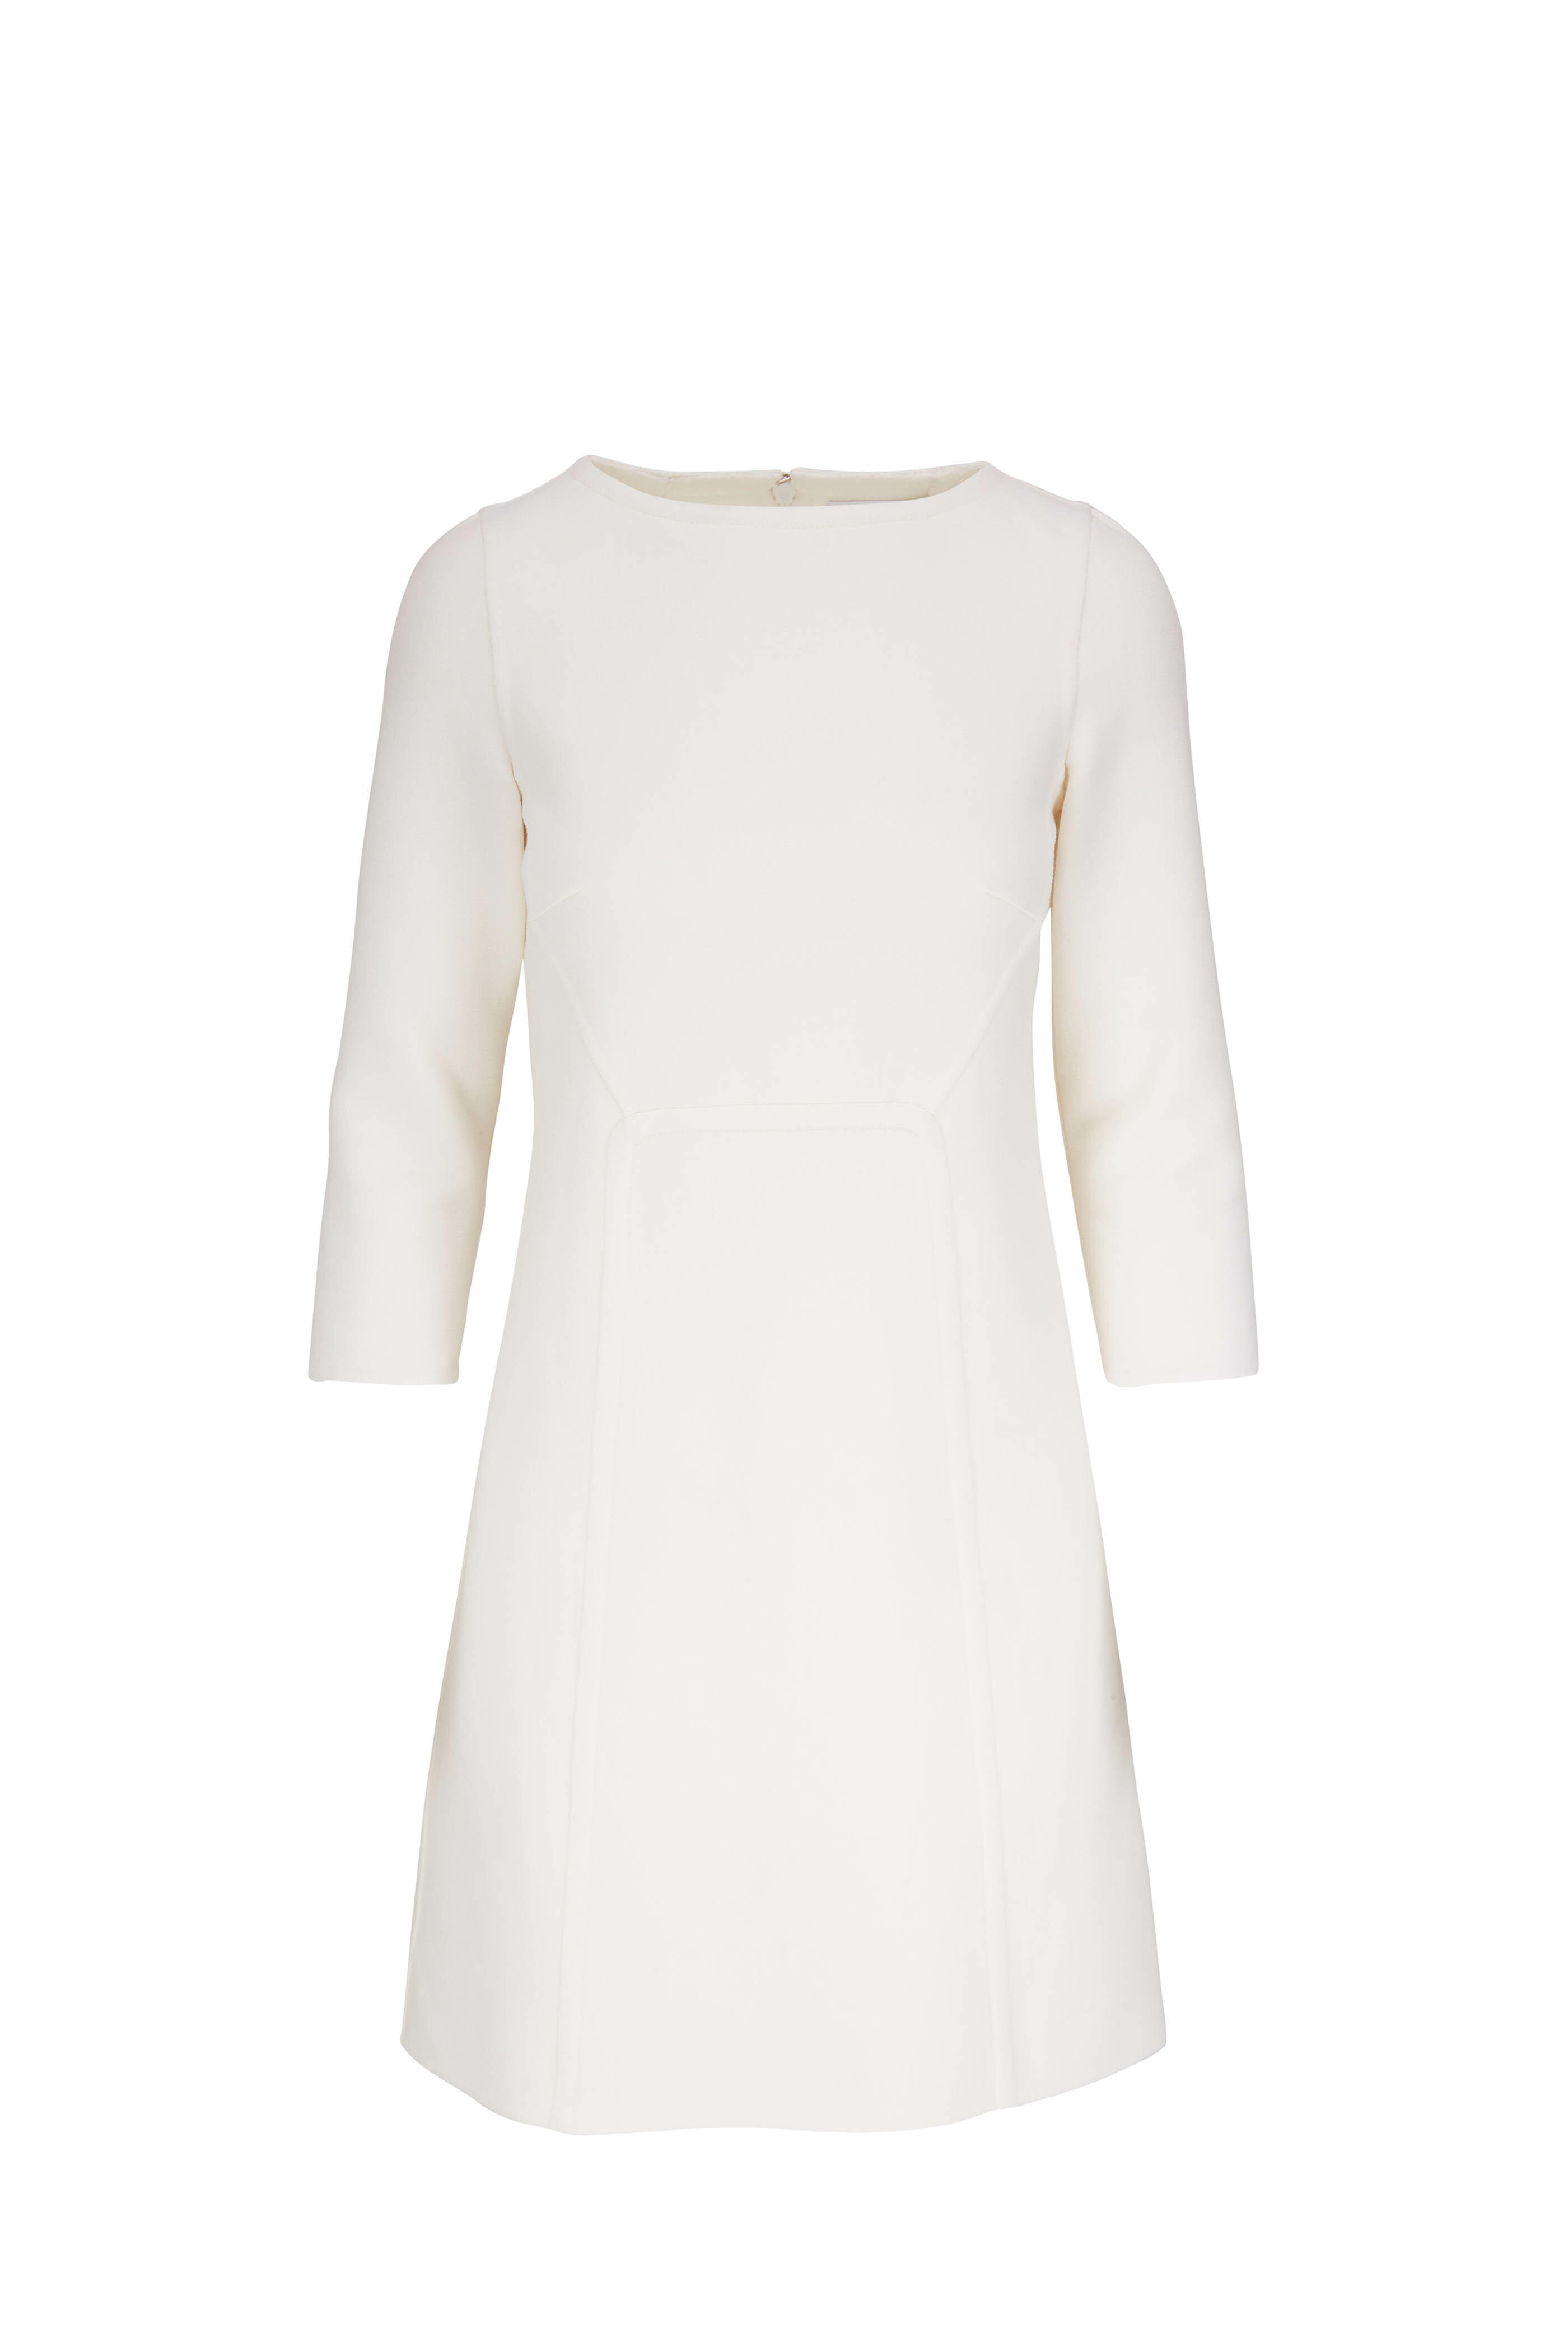 Michael Kors Collection - White Wool Three-Quarter Sleeve Shift Dress